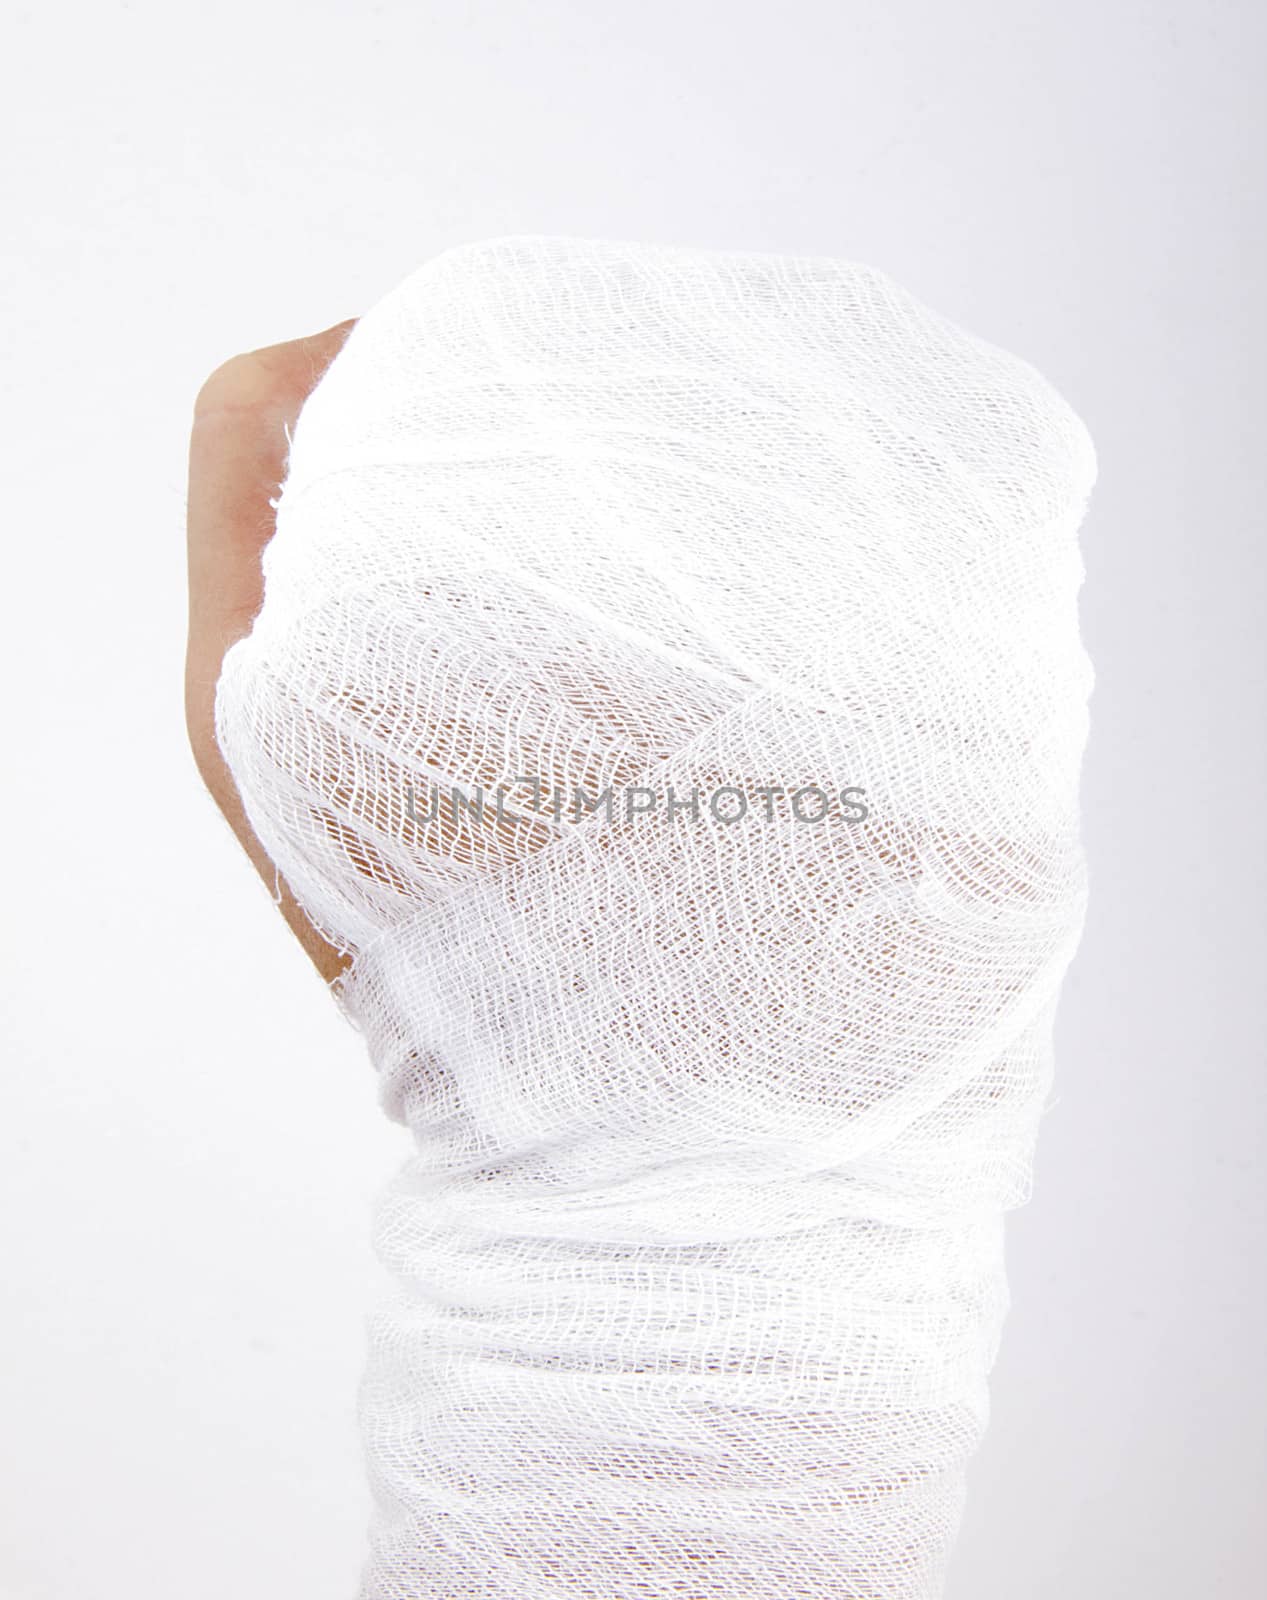 men's bandaged hand by shutswis